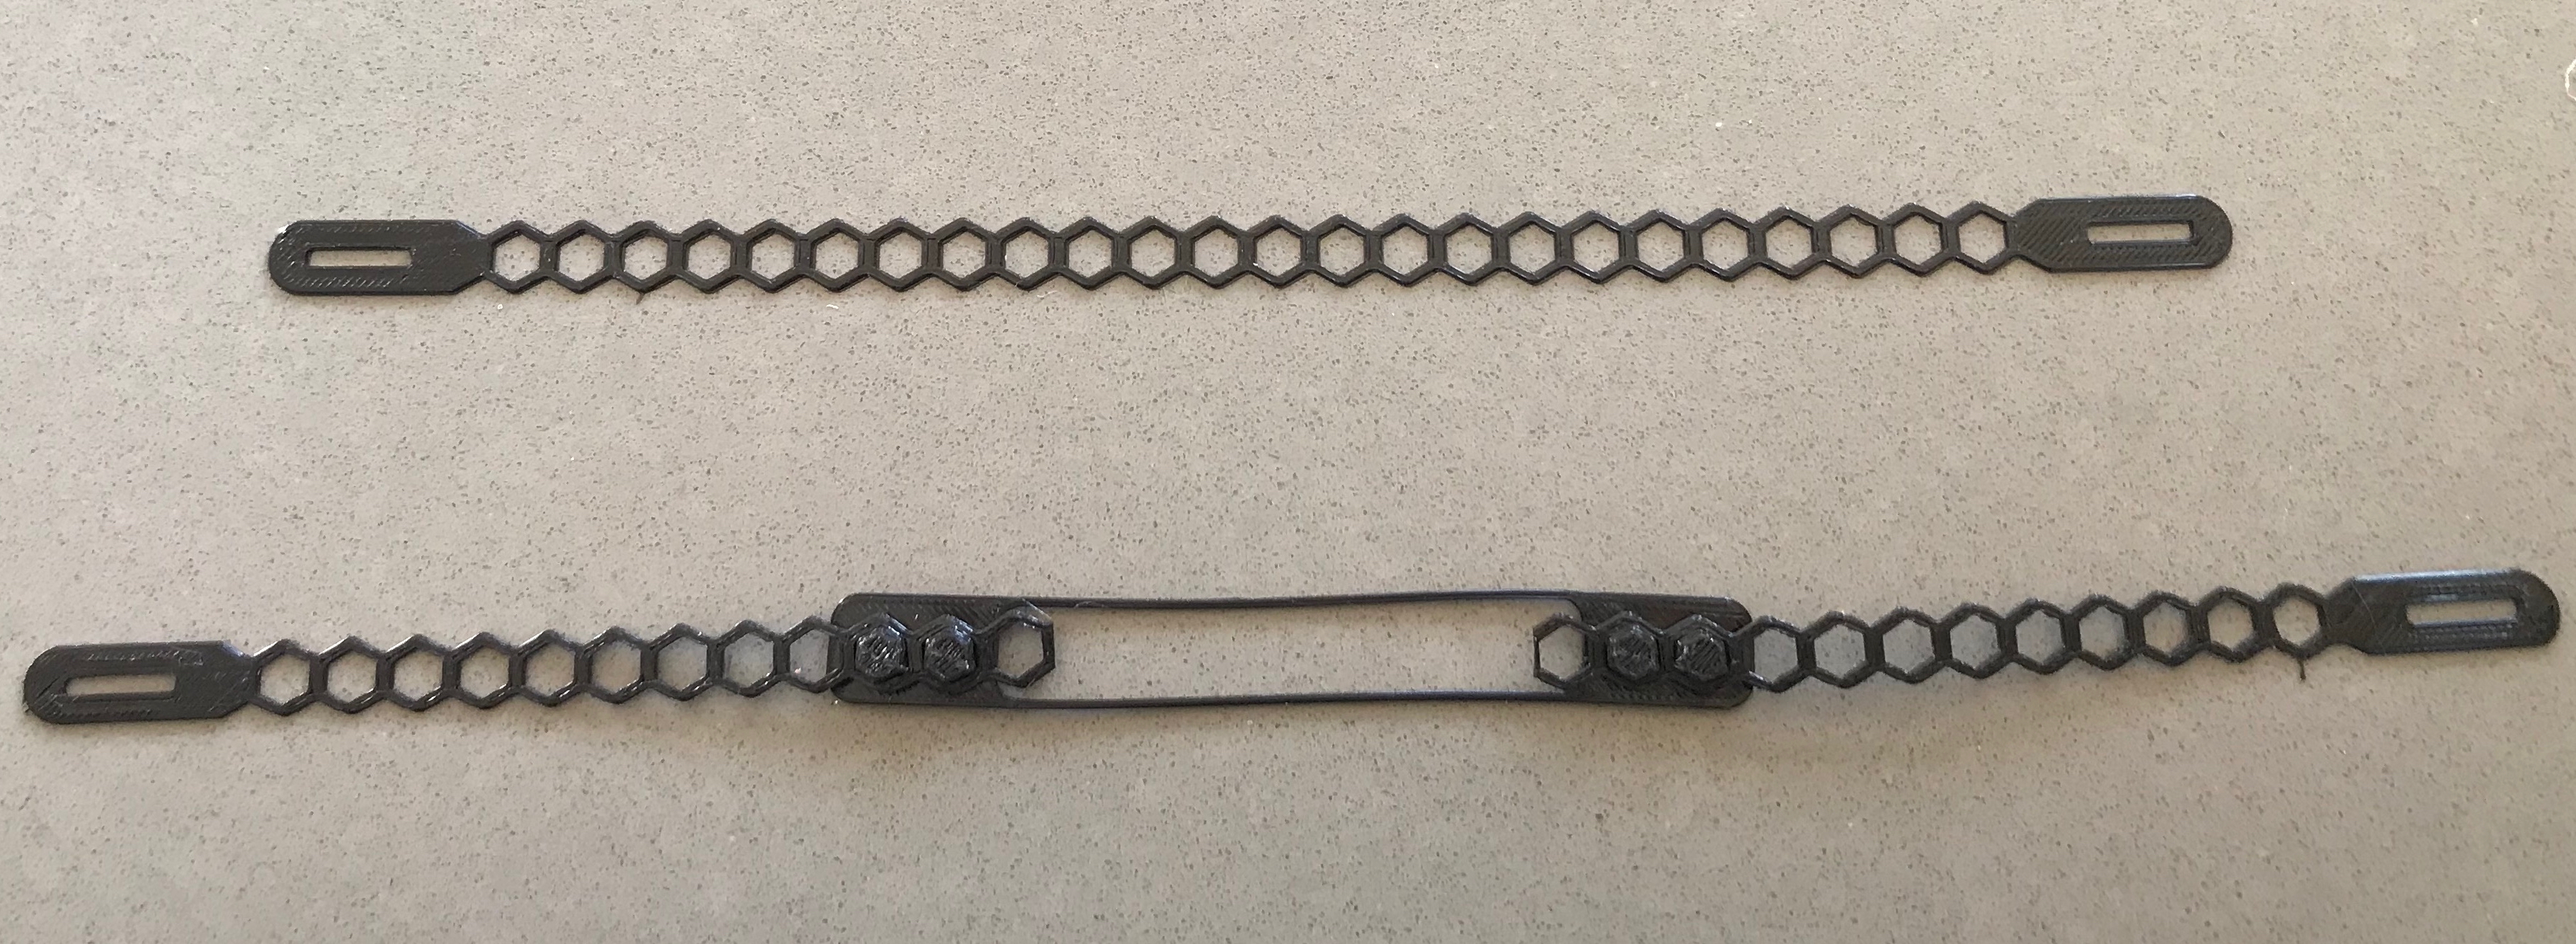 Faceshield rubber strap extender.